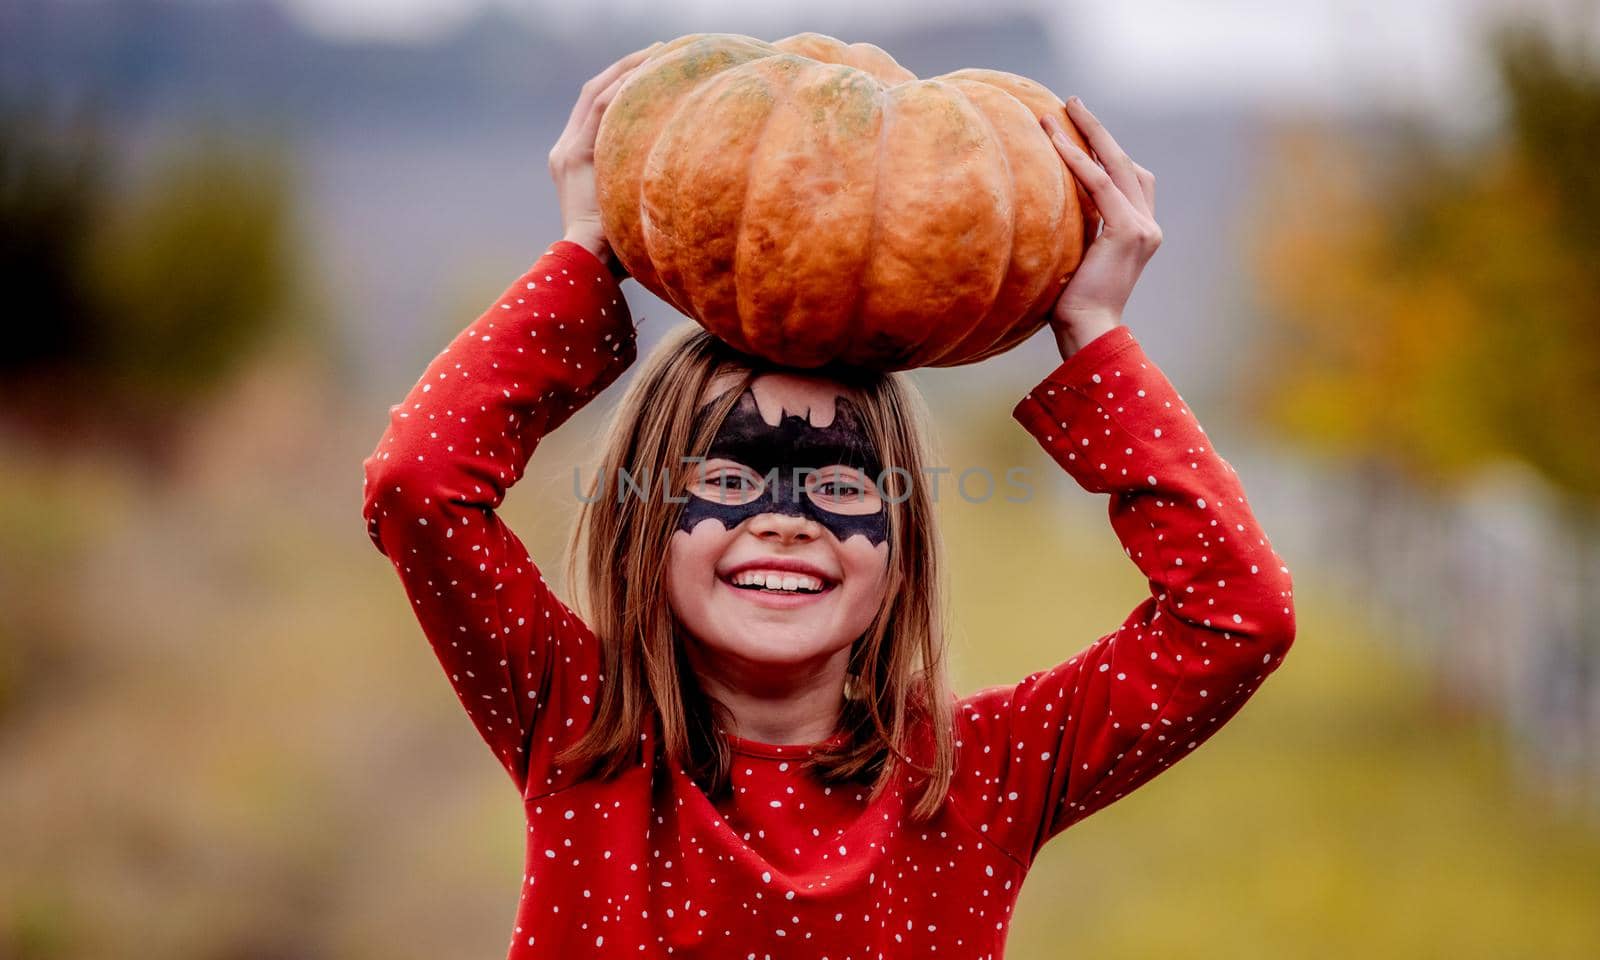 Smiling little girl holding pumpkin above head by tan4ikk1